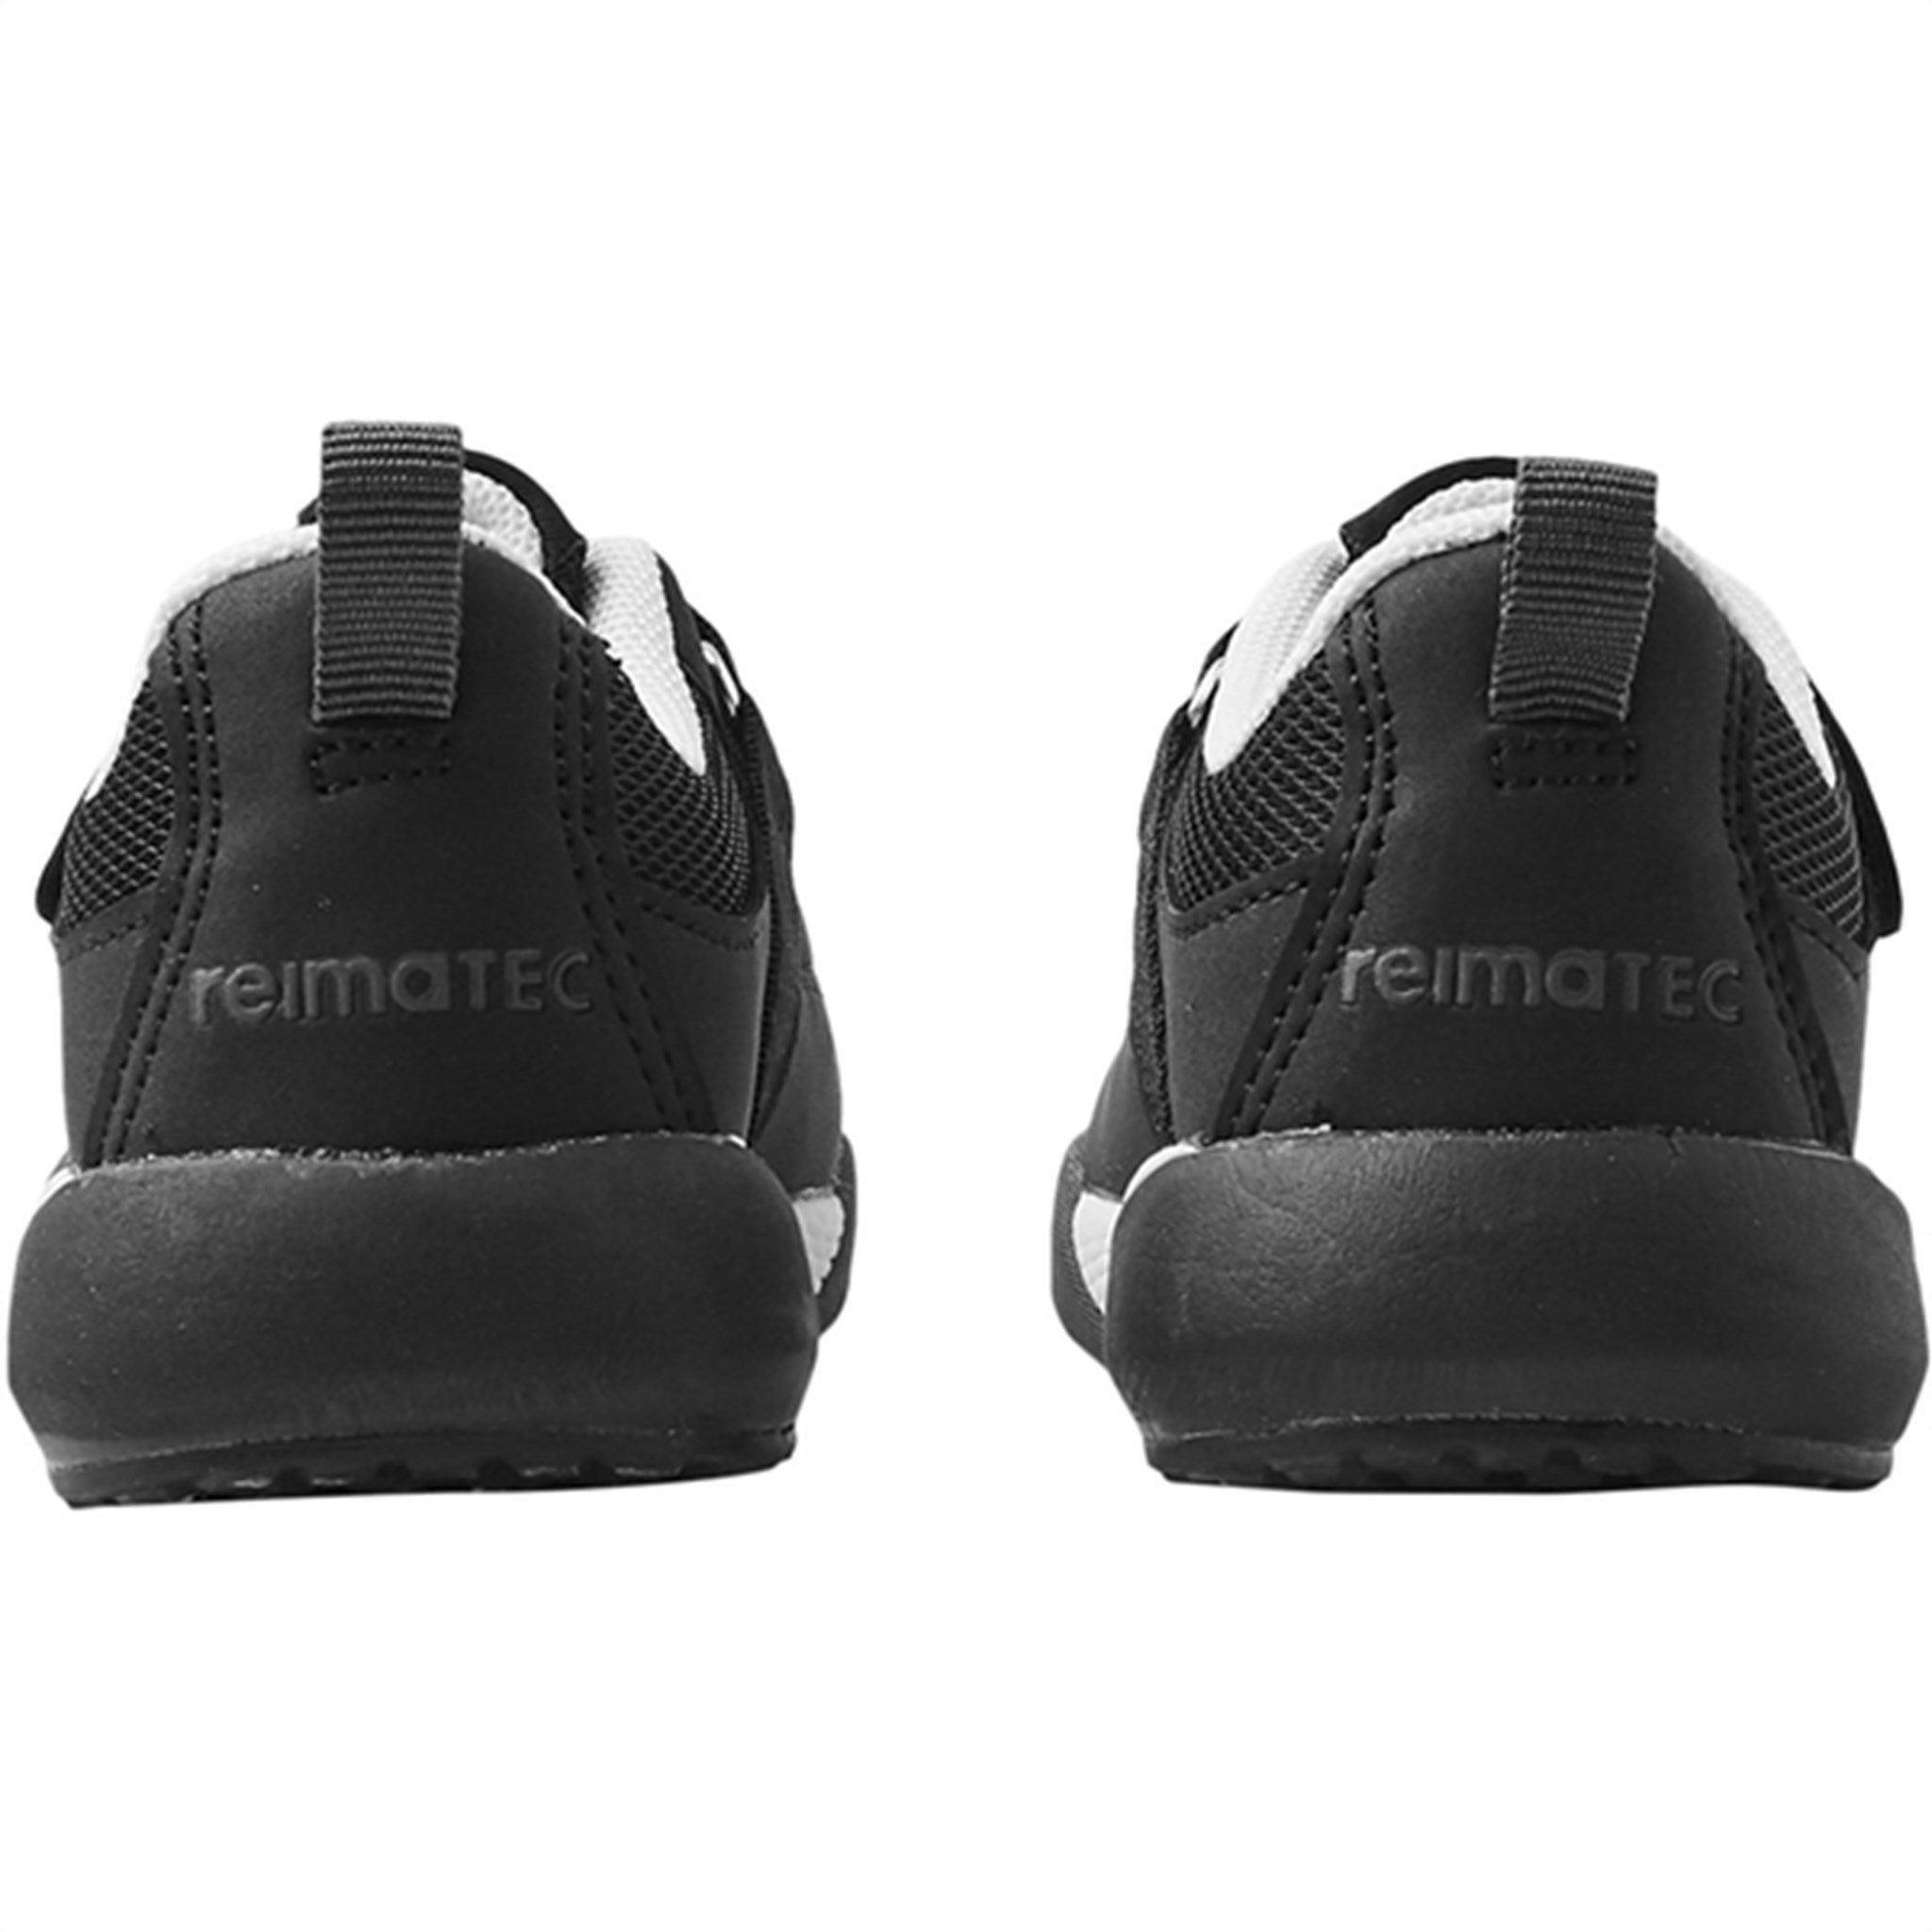 Reima Reimatec Waterproof Sneakers Kiirus Black 8